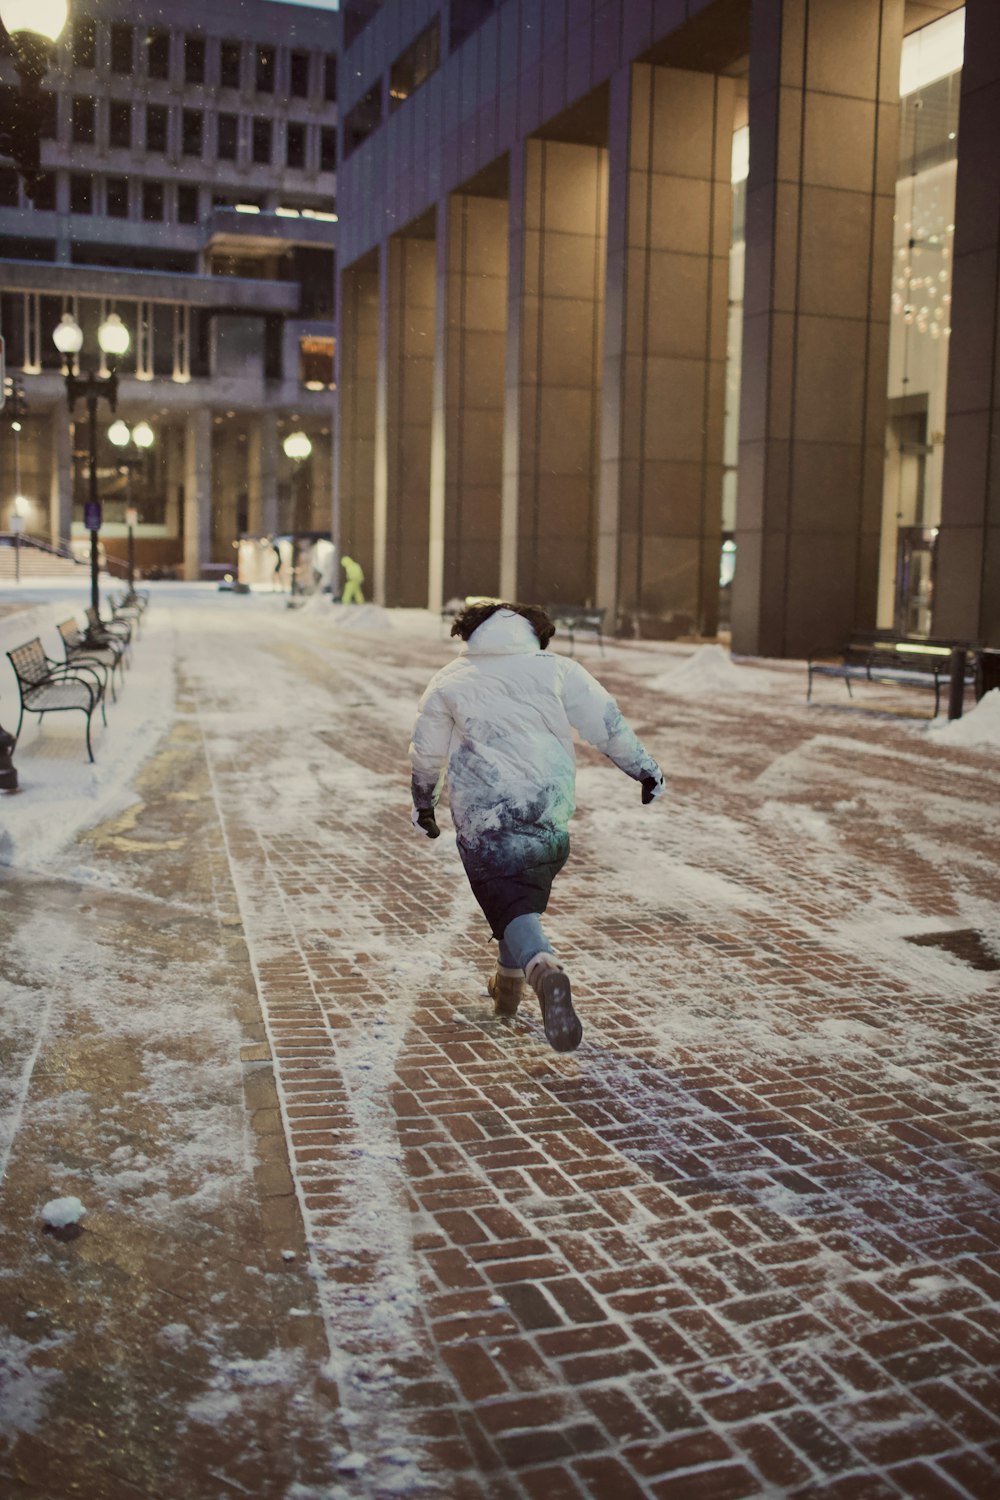 a person riding a skateboard down a snow covered sidewalk